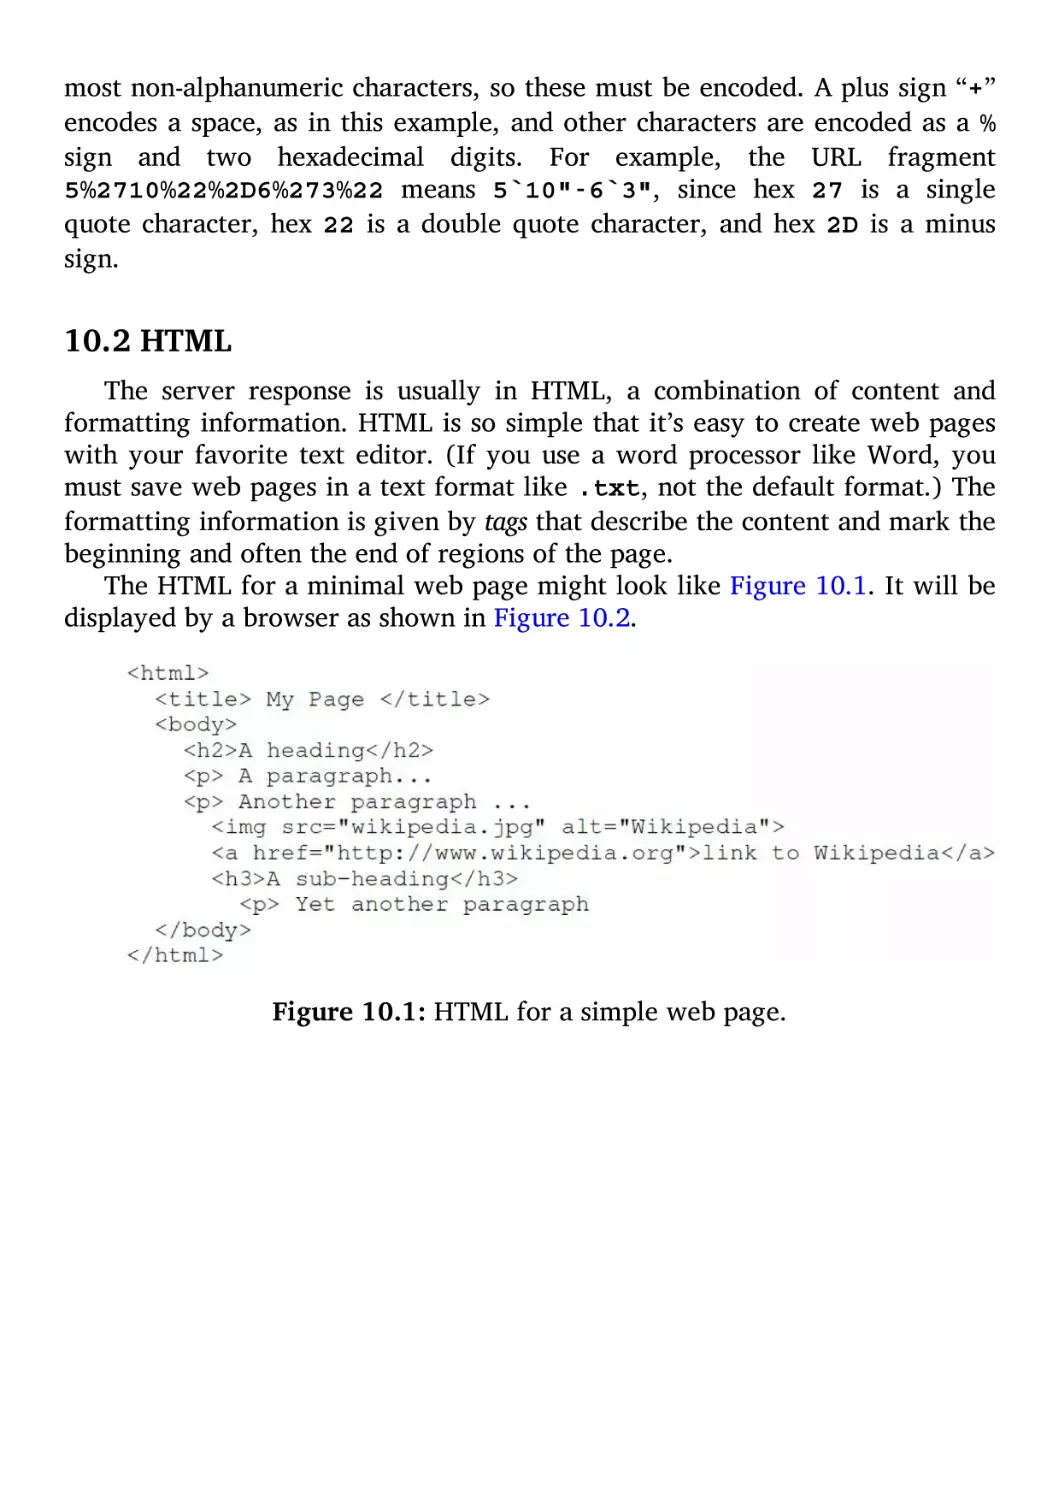 10.2 HTML